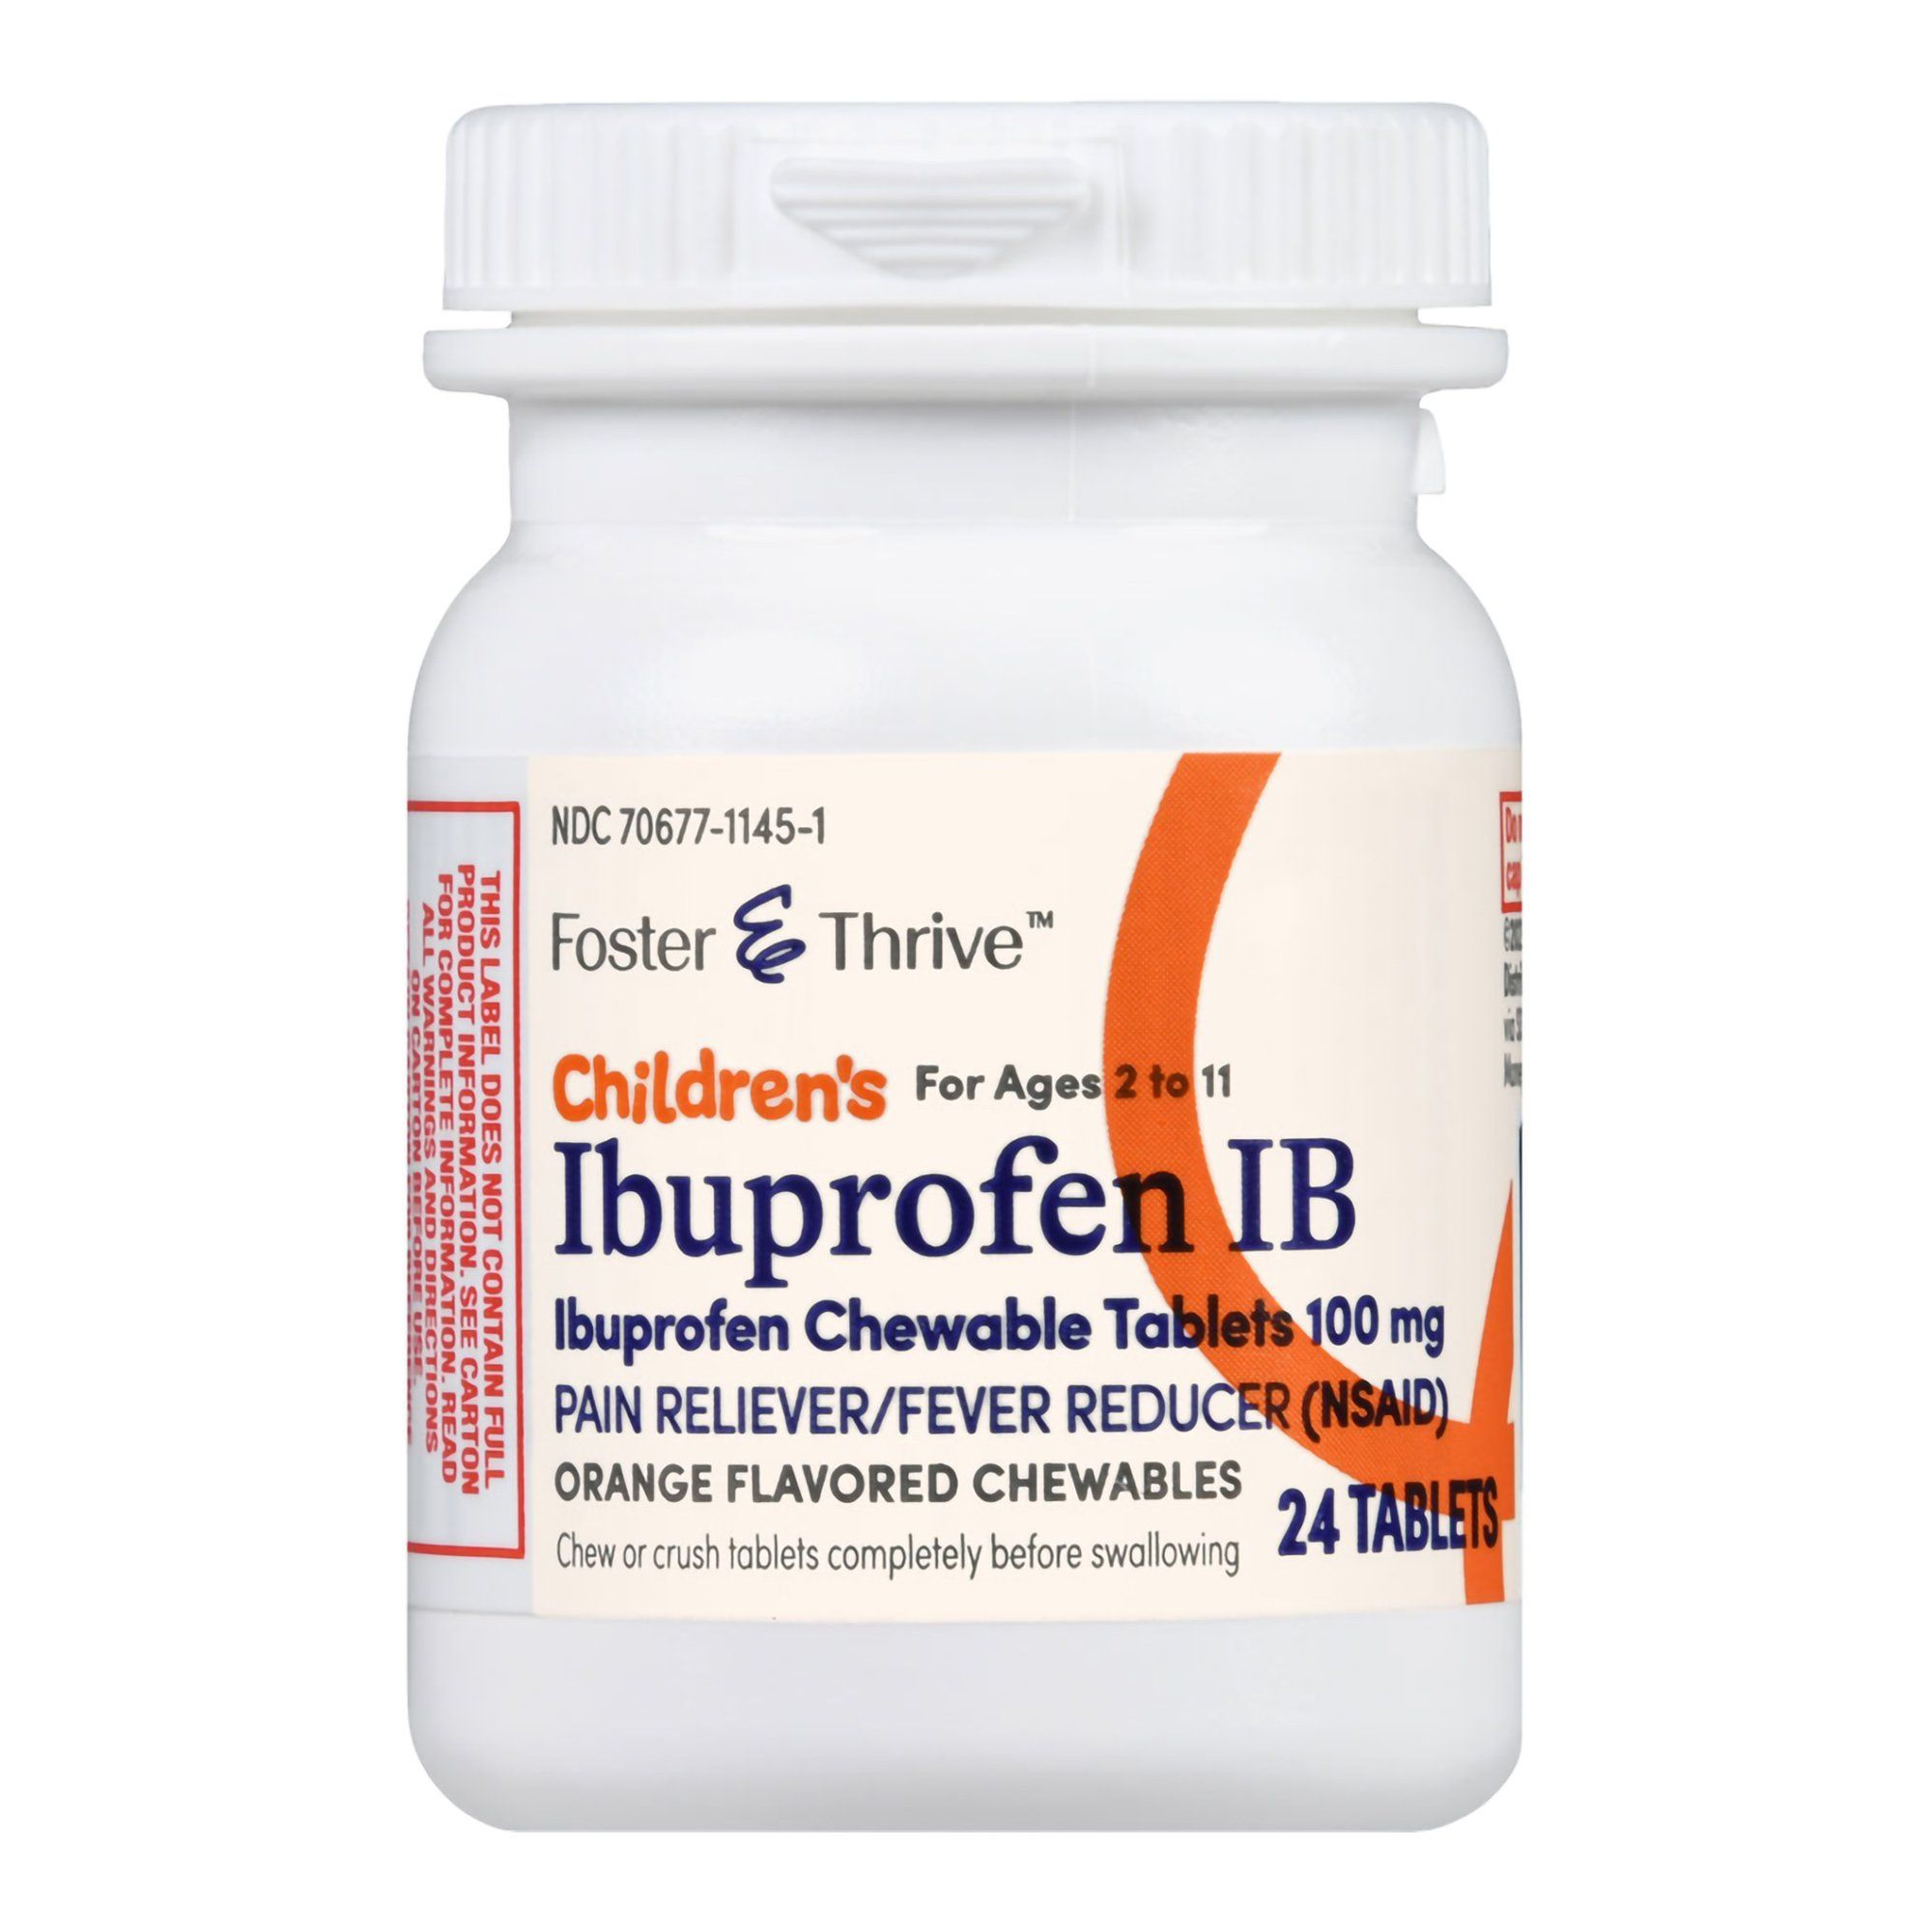 Foster & Thrive Children's Ibuprofen IB Chewable Tablets, 100 mg, Orange - 24 ct